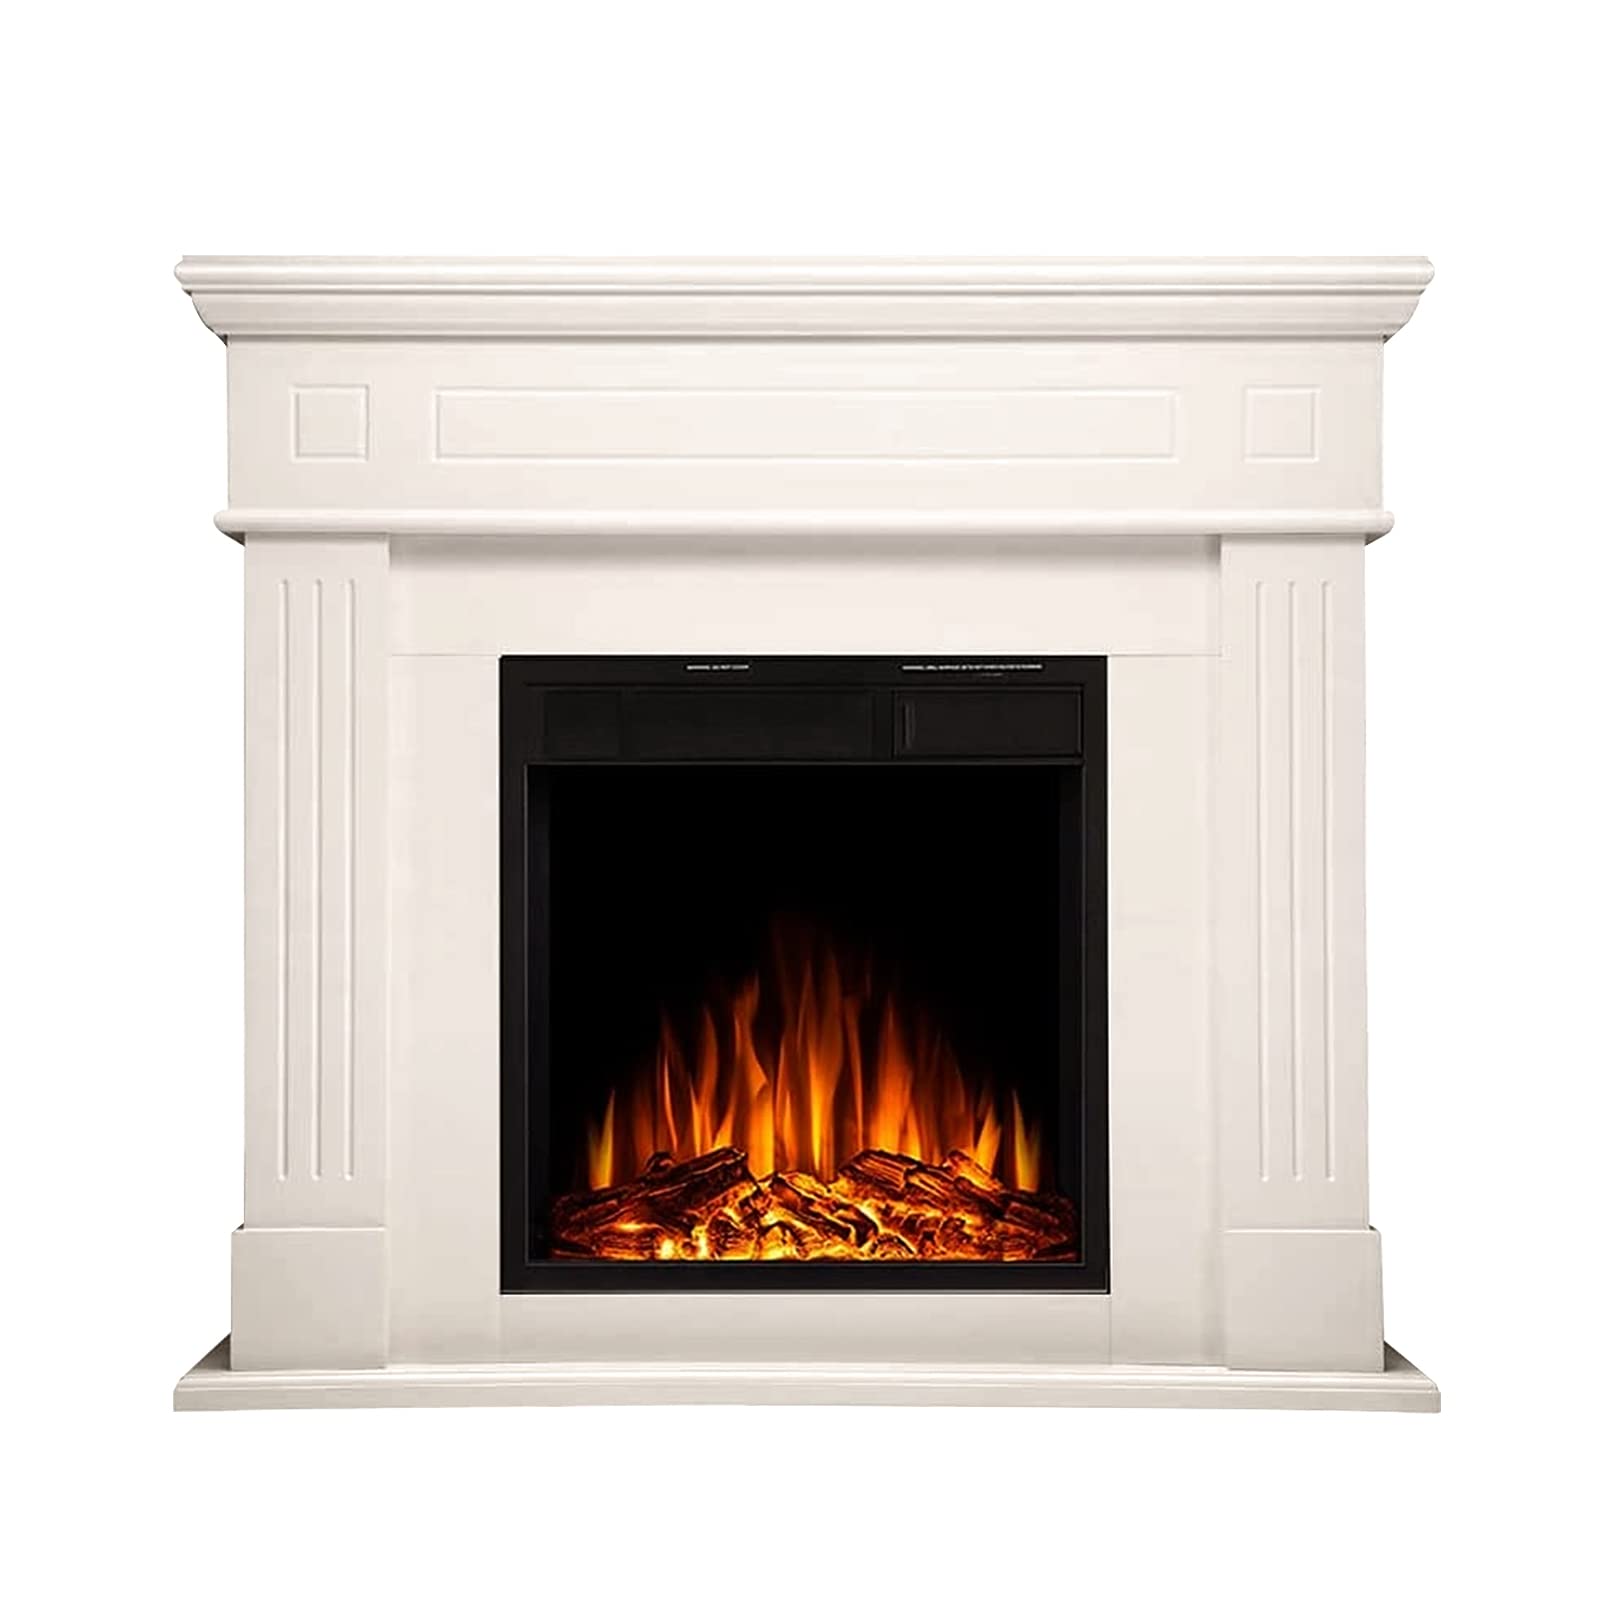 R.W.FLAME 43"Electric Fireplace Mantel Wooden Surround Firebox,750W/1500W, Black